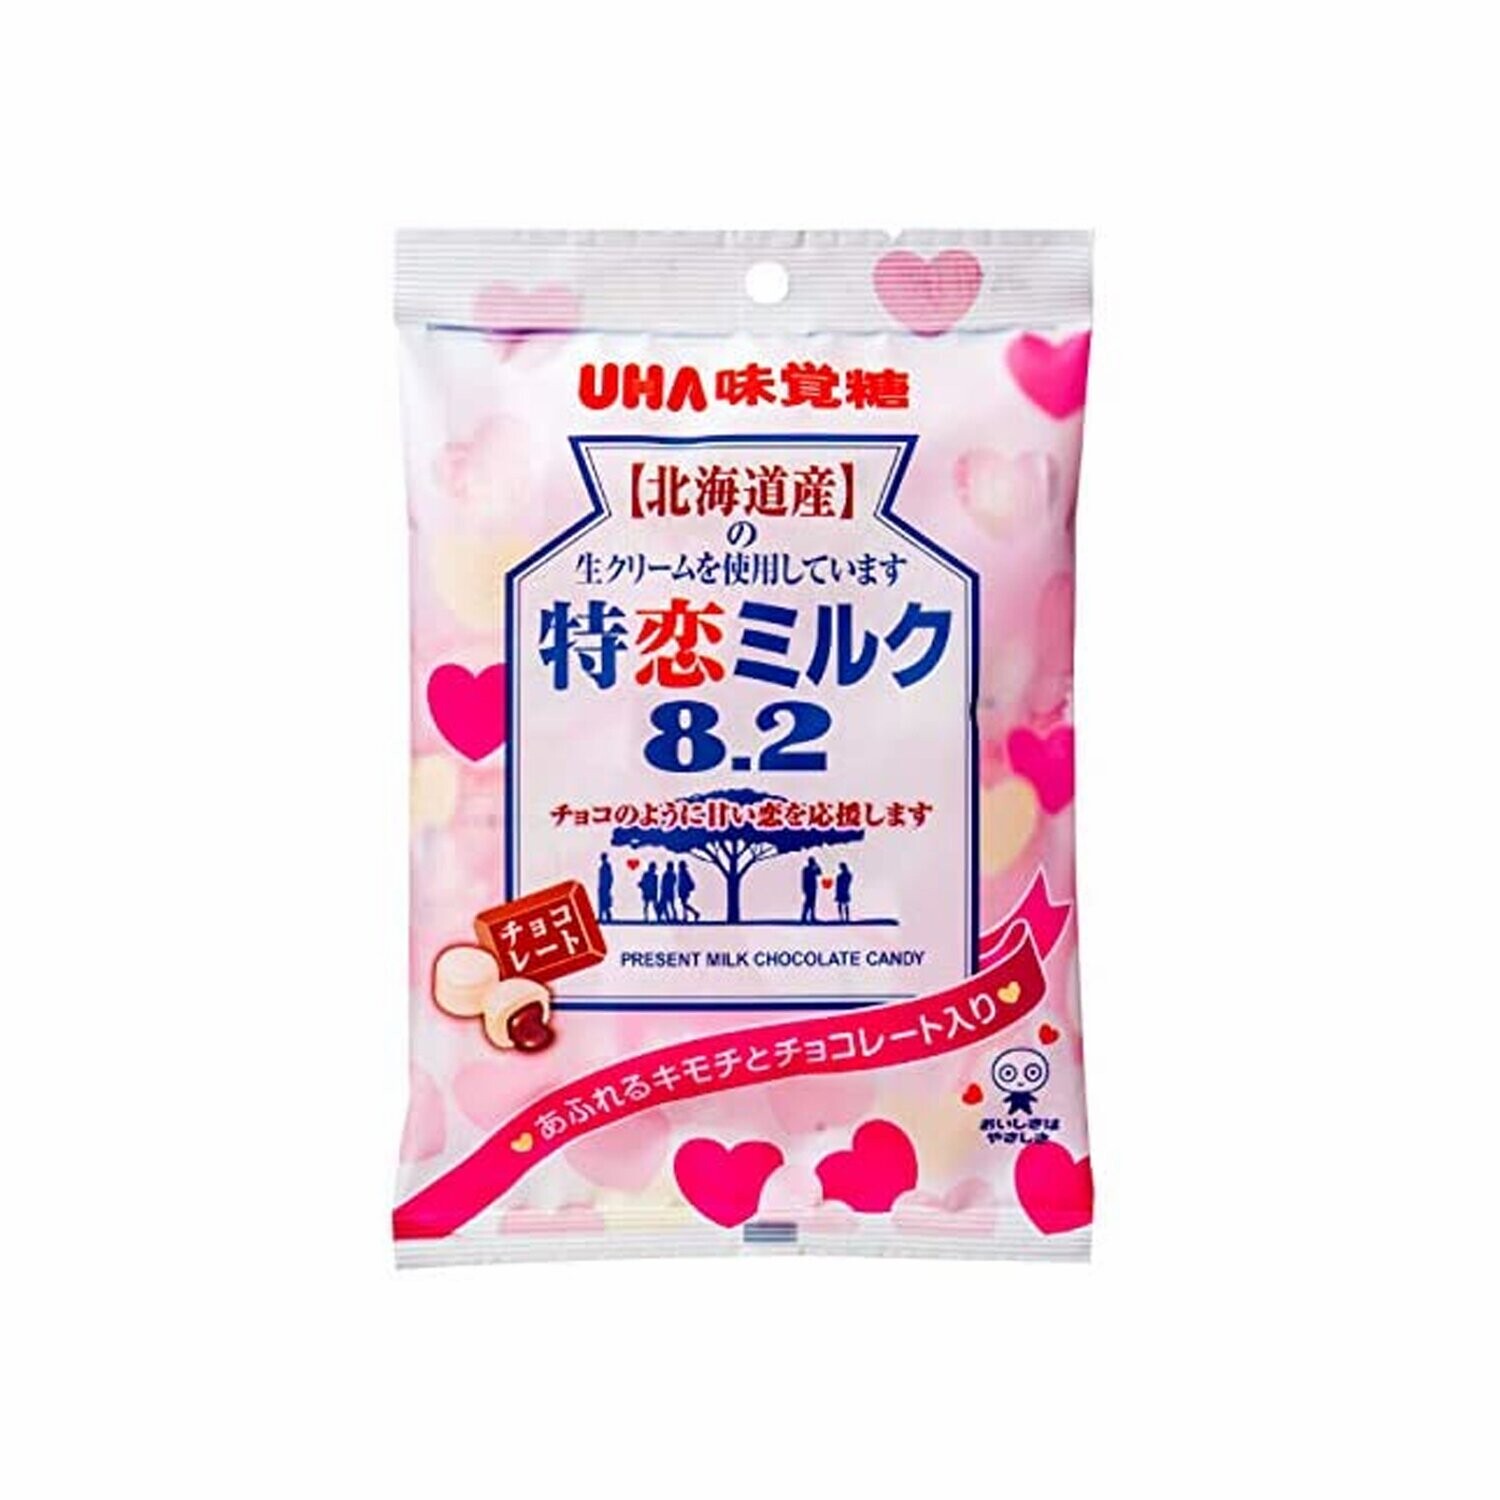 UHA Mikakuto 8.2 Milk Candy Love Chocolate Flavour